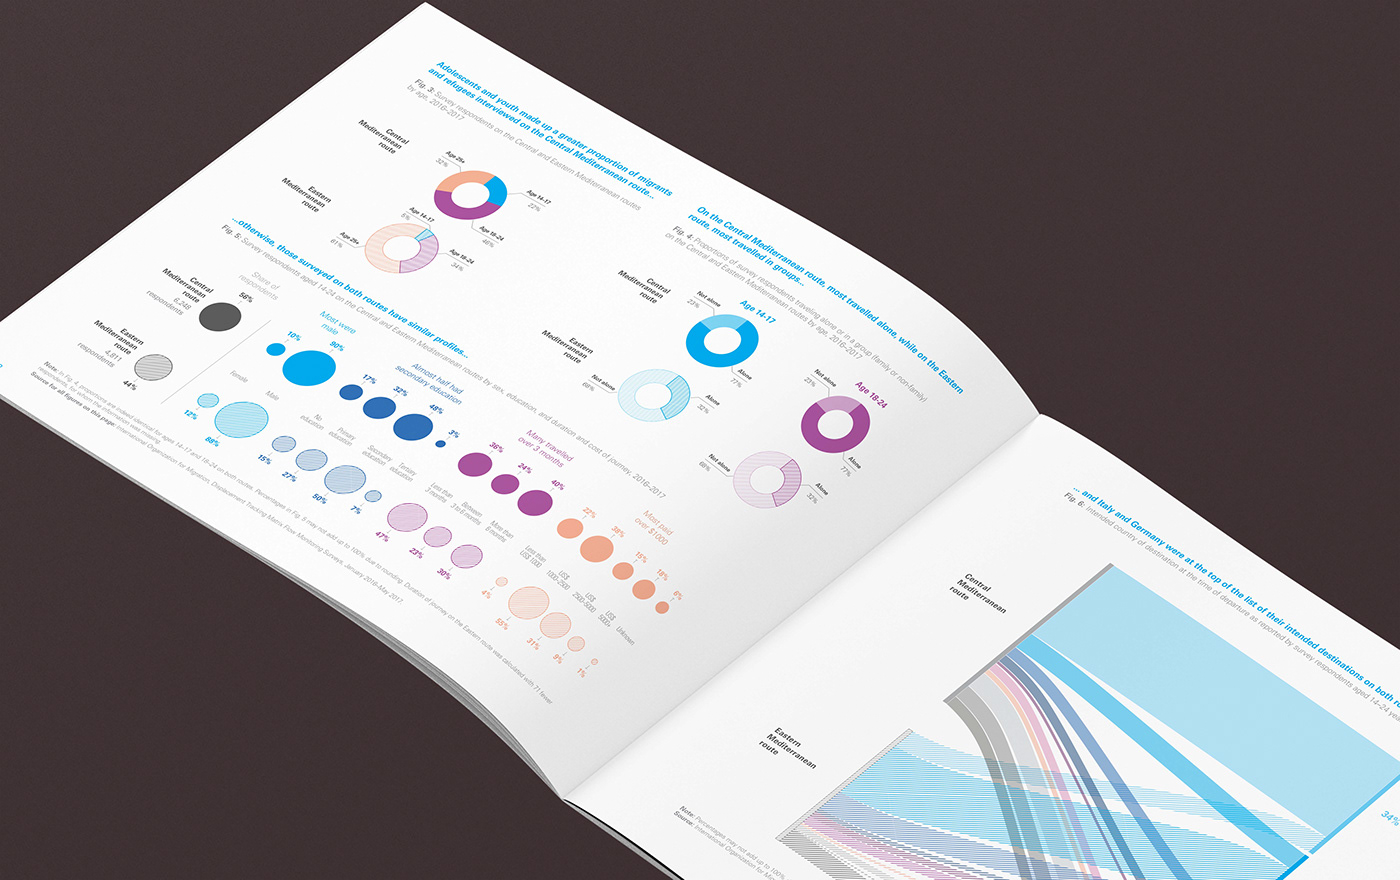 unicef infographic data viualisation annual report United Nations agca 信息设计 图形设计 平面设计 平面設計